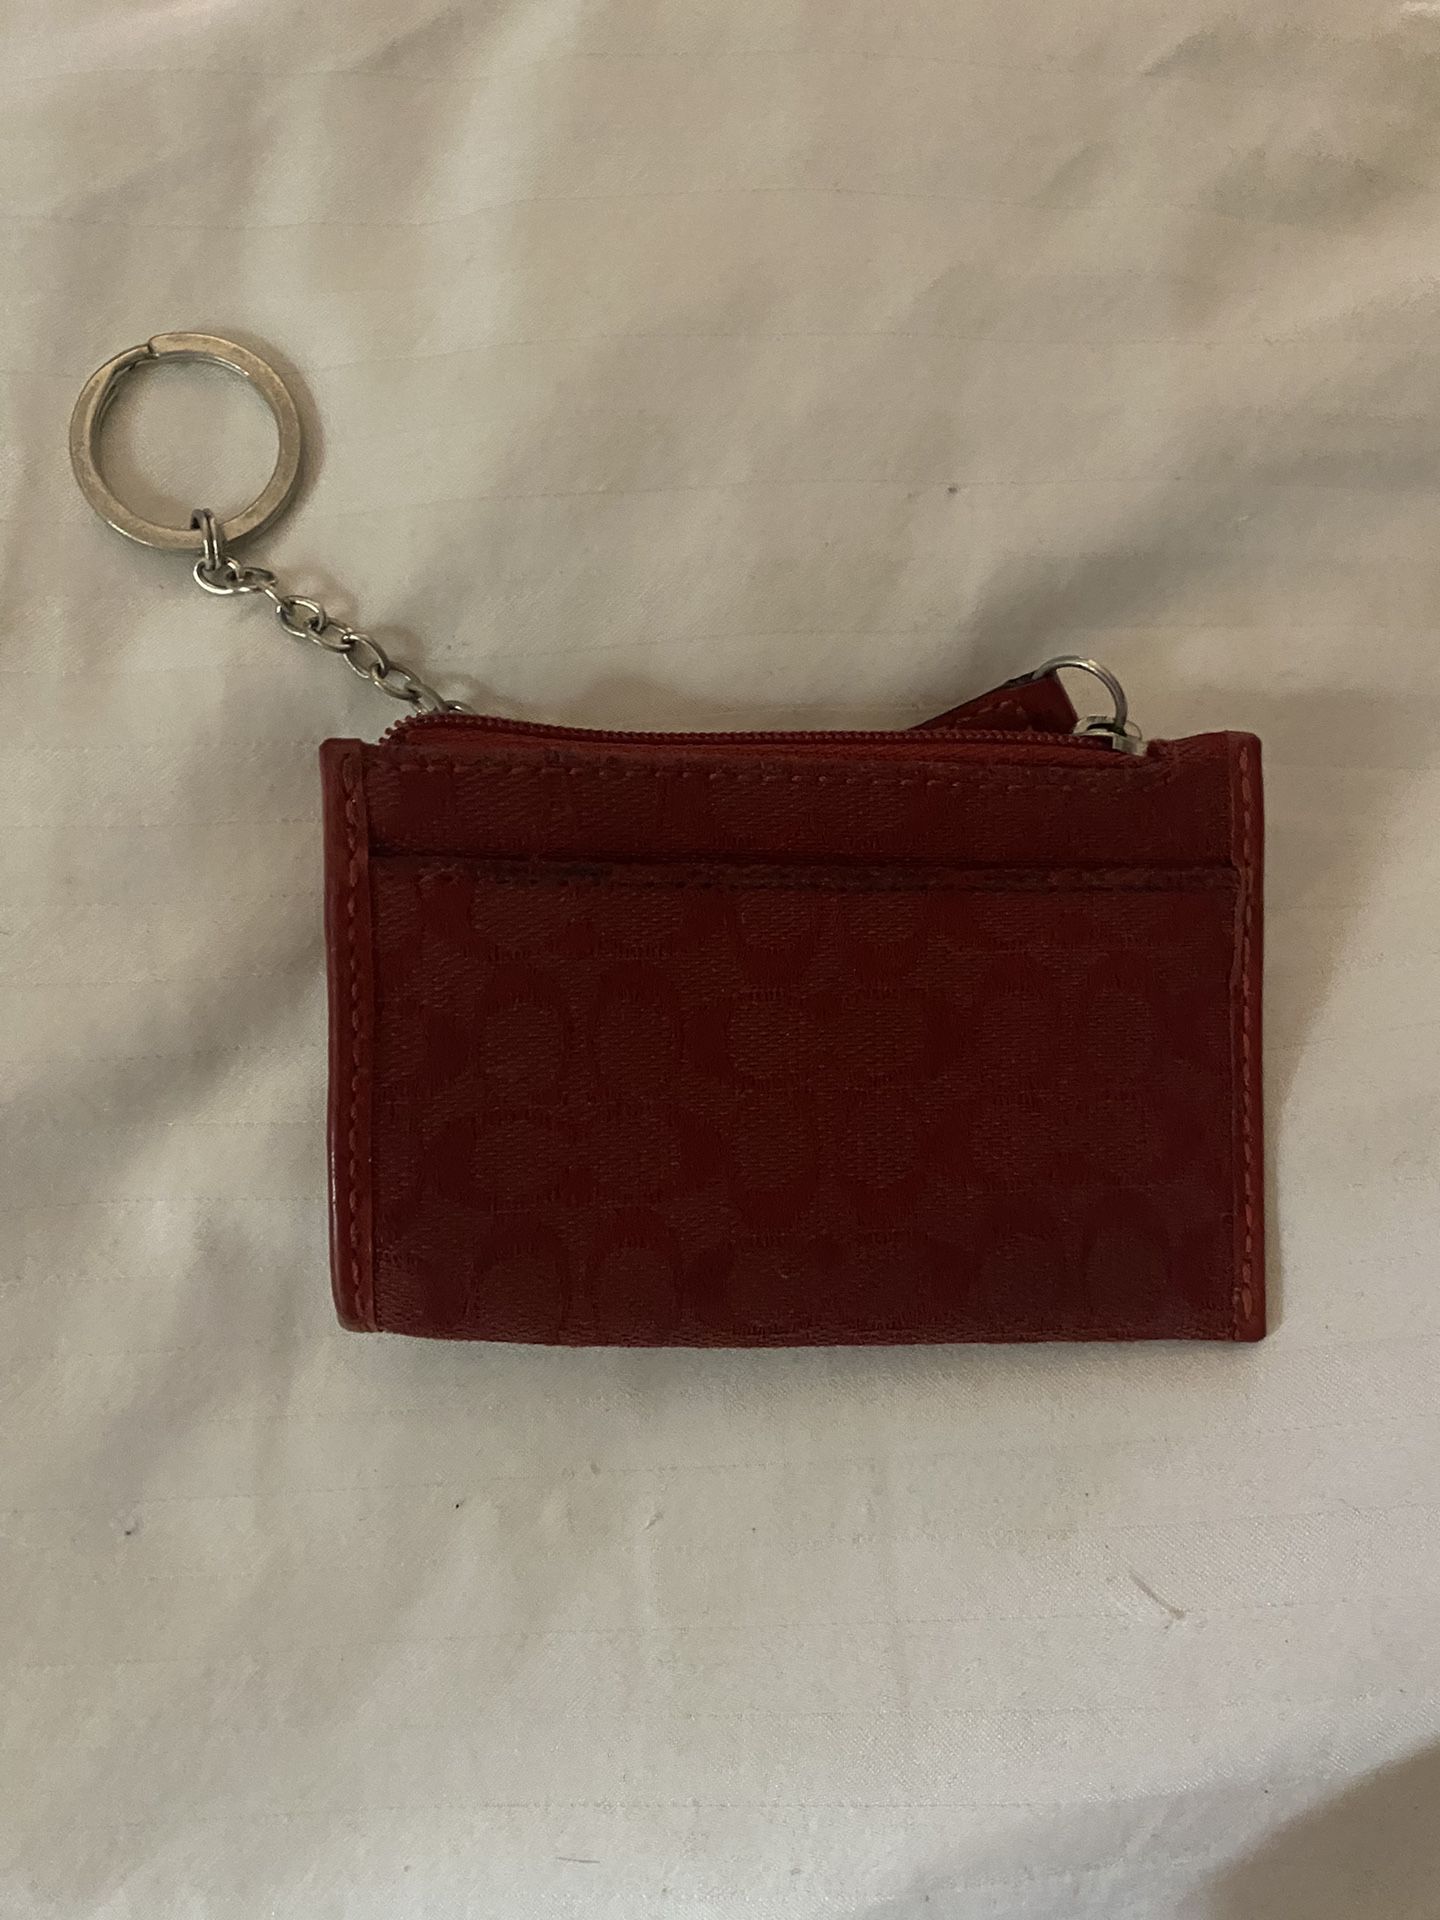 Coach red coin purse/keychain